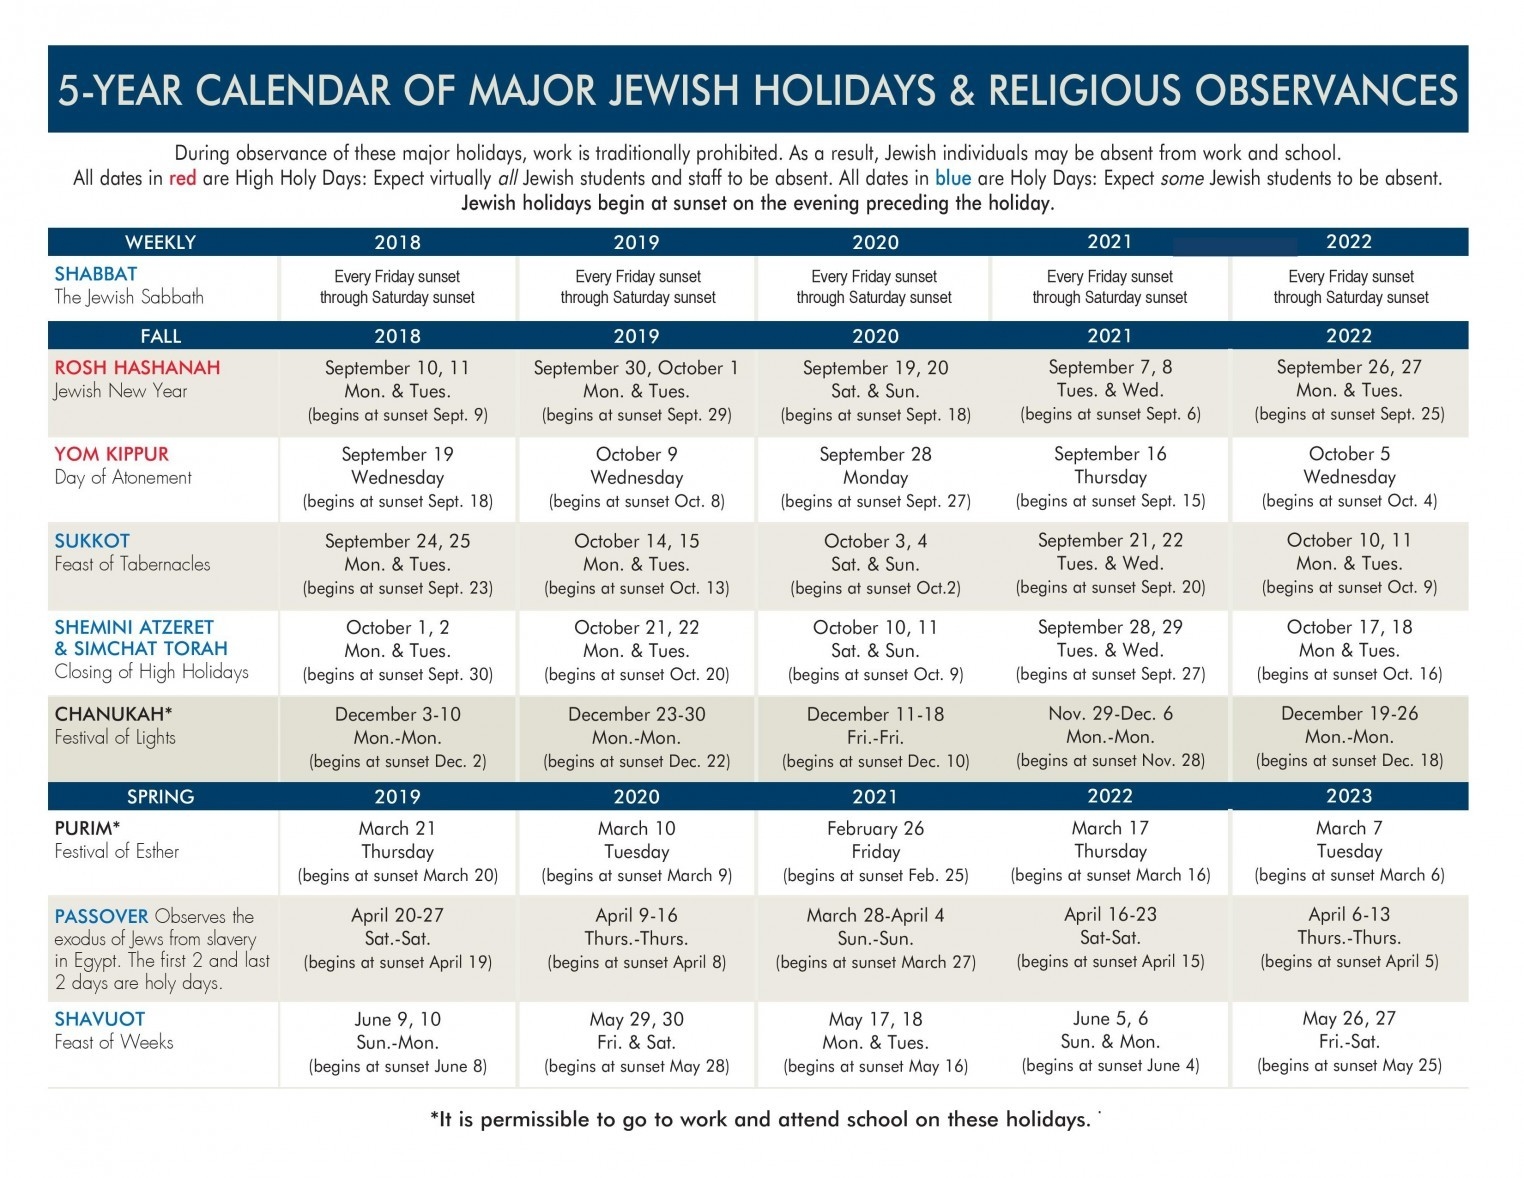 5-Year Jewish Holiday Calendar | Jewish Federation Of-Jewish Holiday Calendar 2021